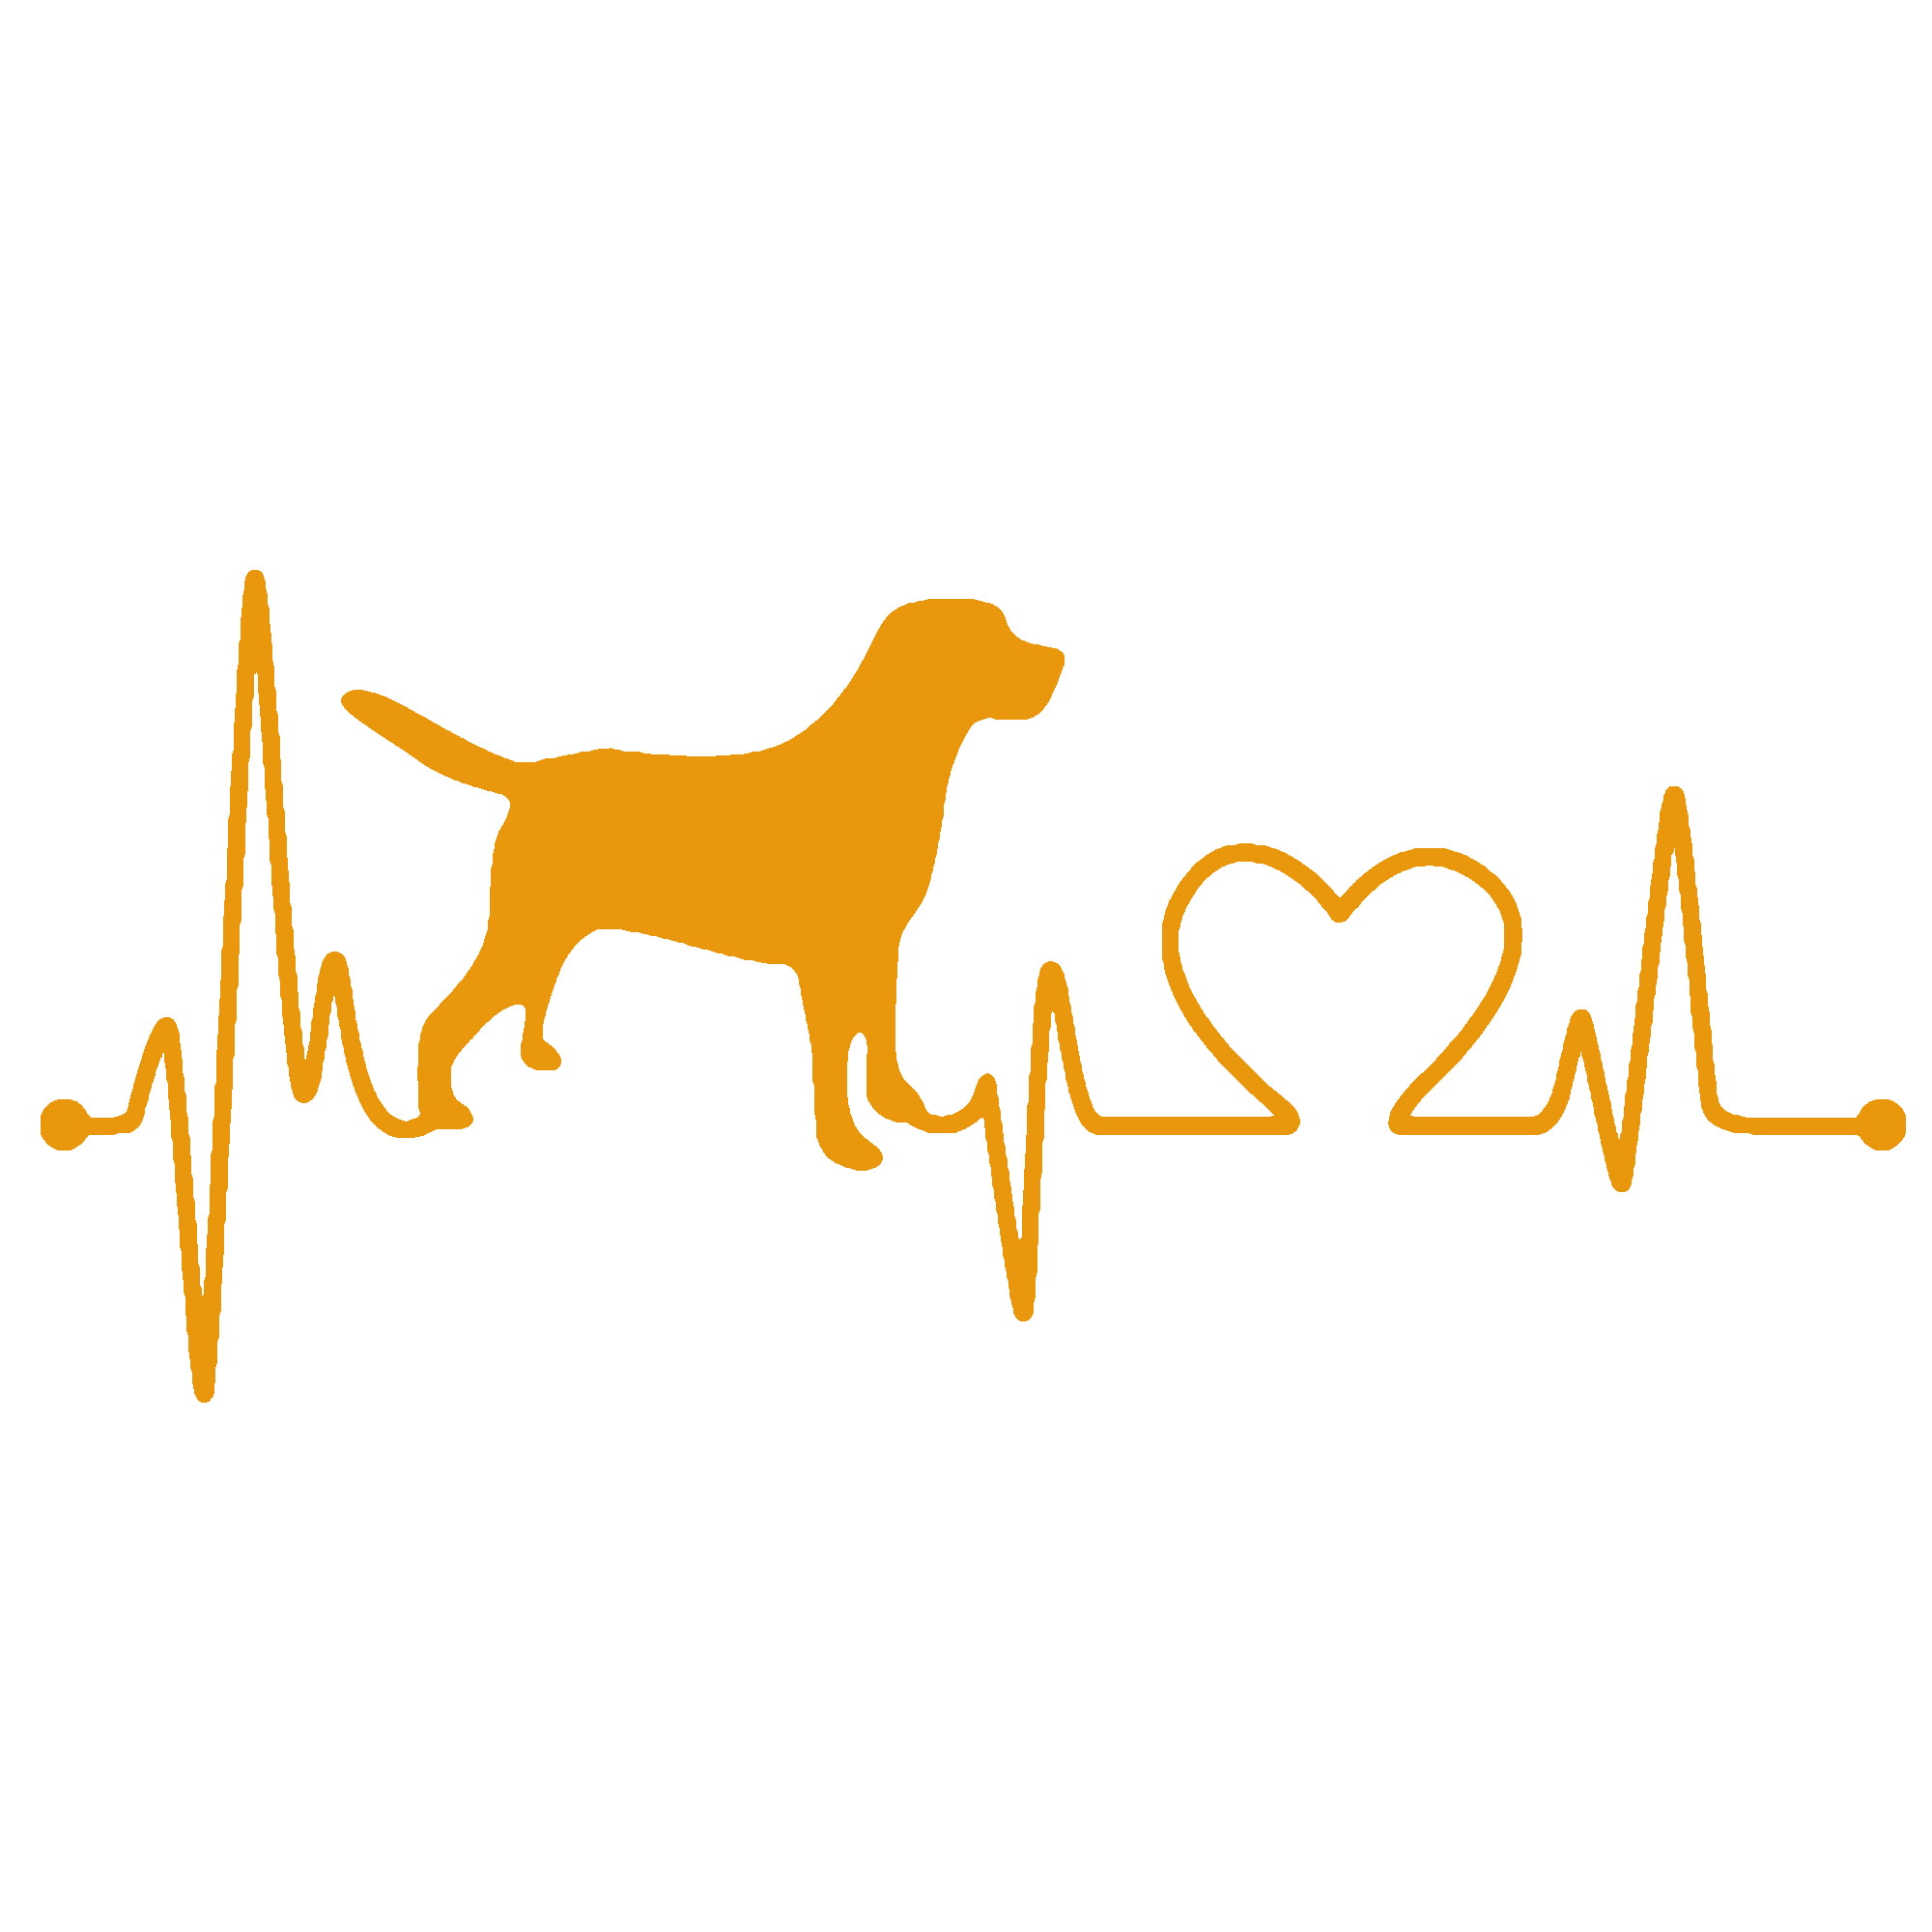 CAT HEART Vinyl Decal Sticker Car Window Wall Bumper Animal Adopt Paw Love Pet 